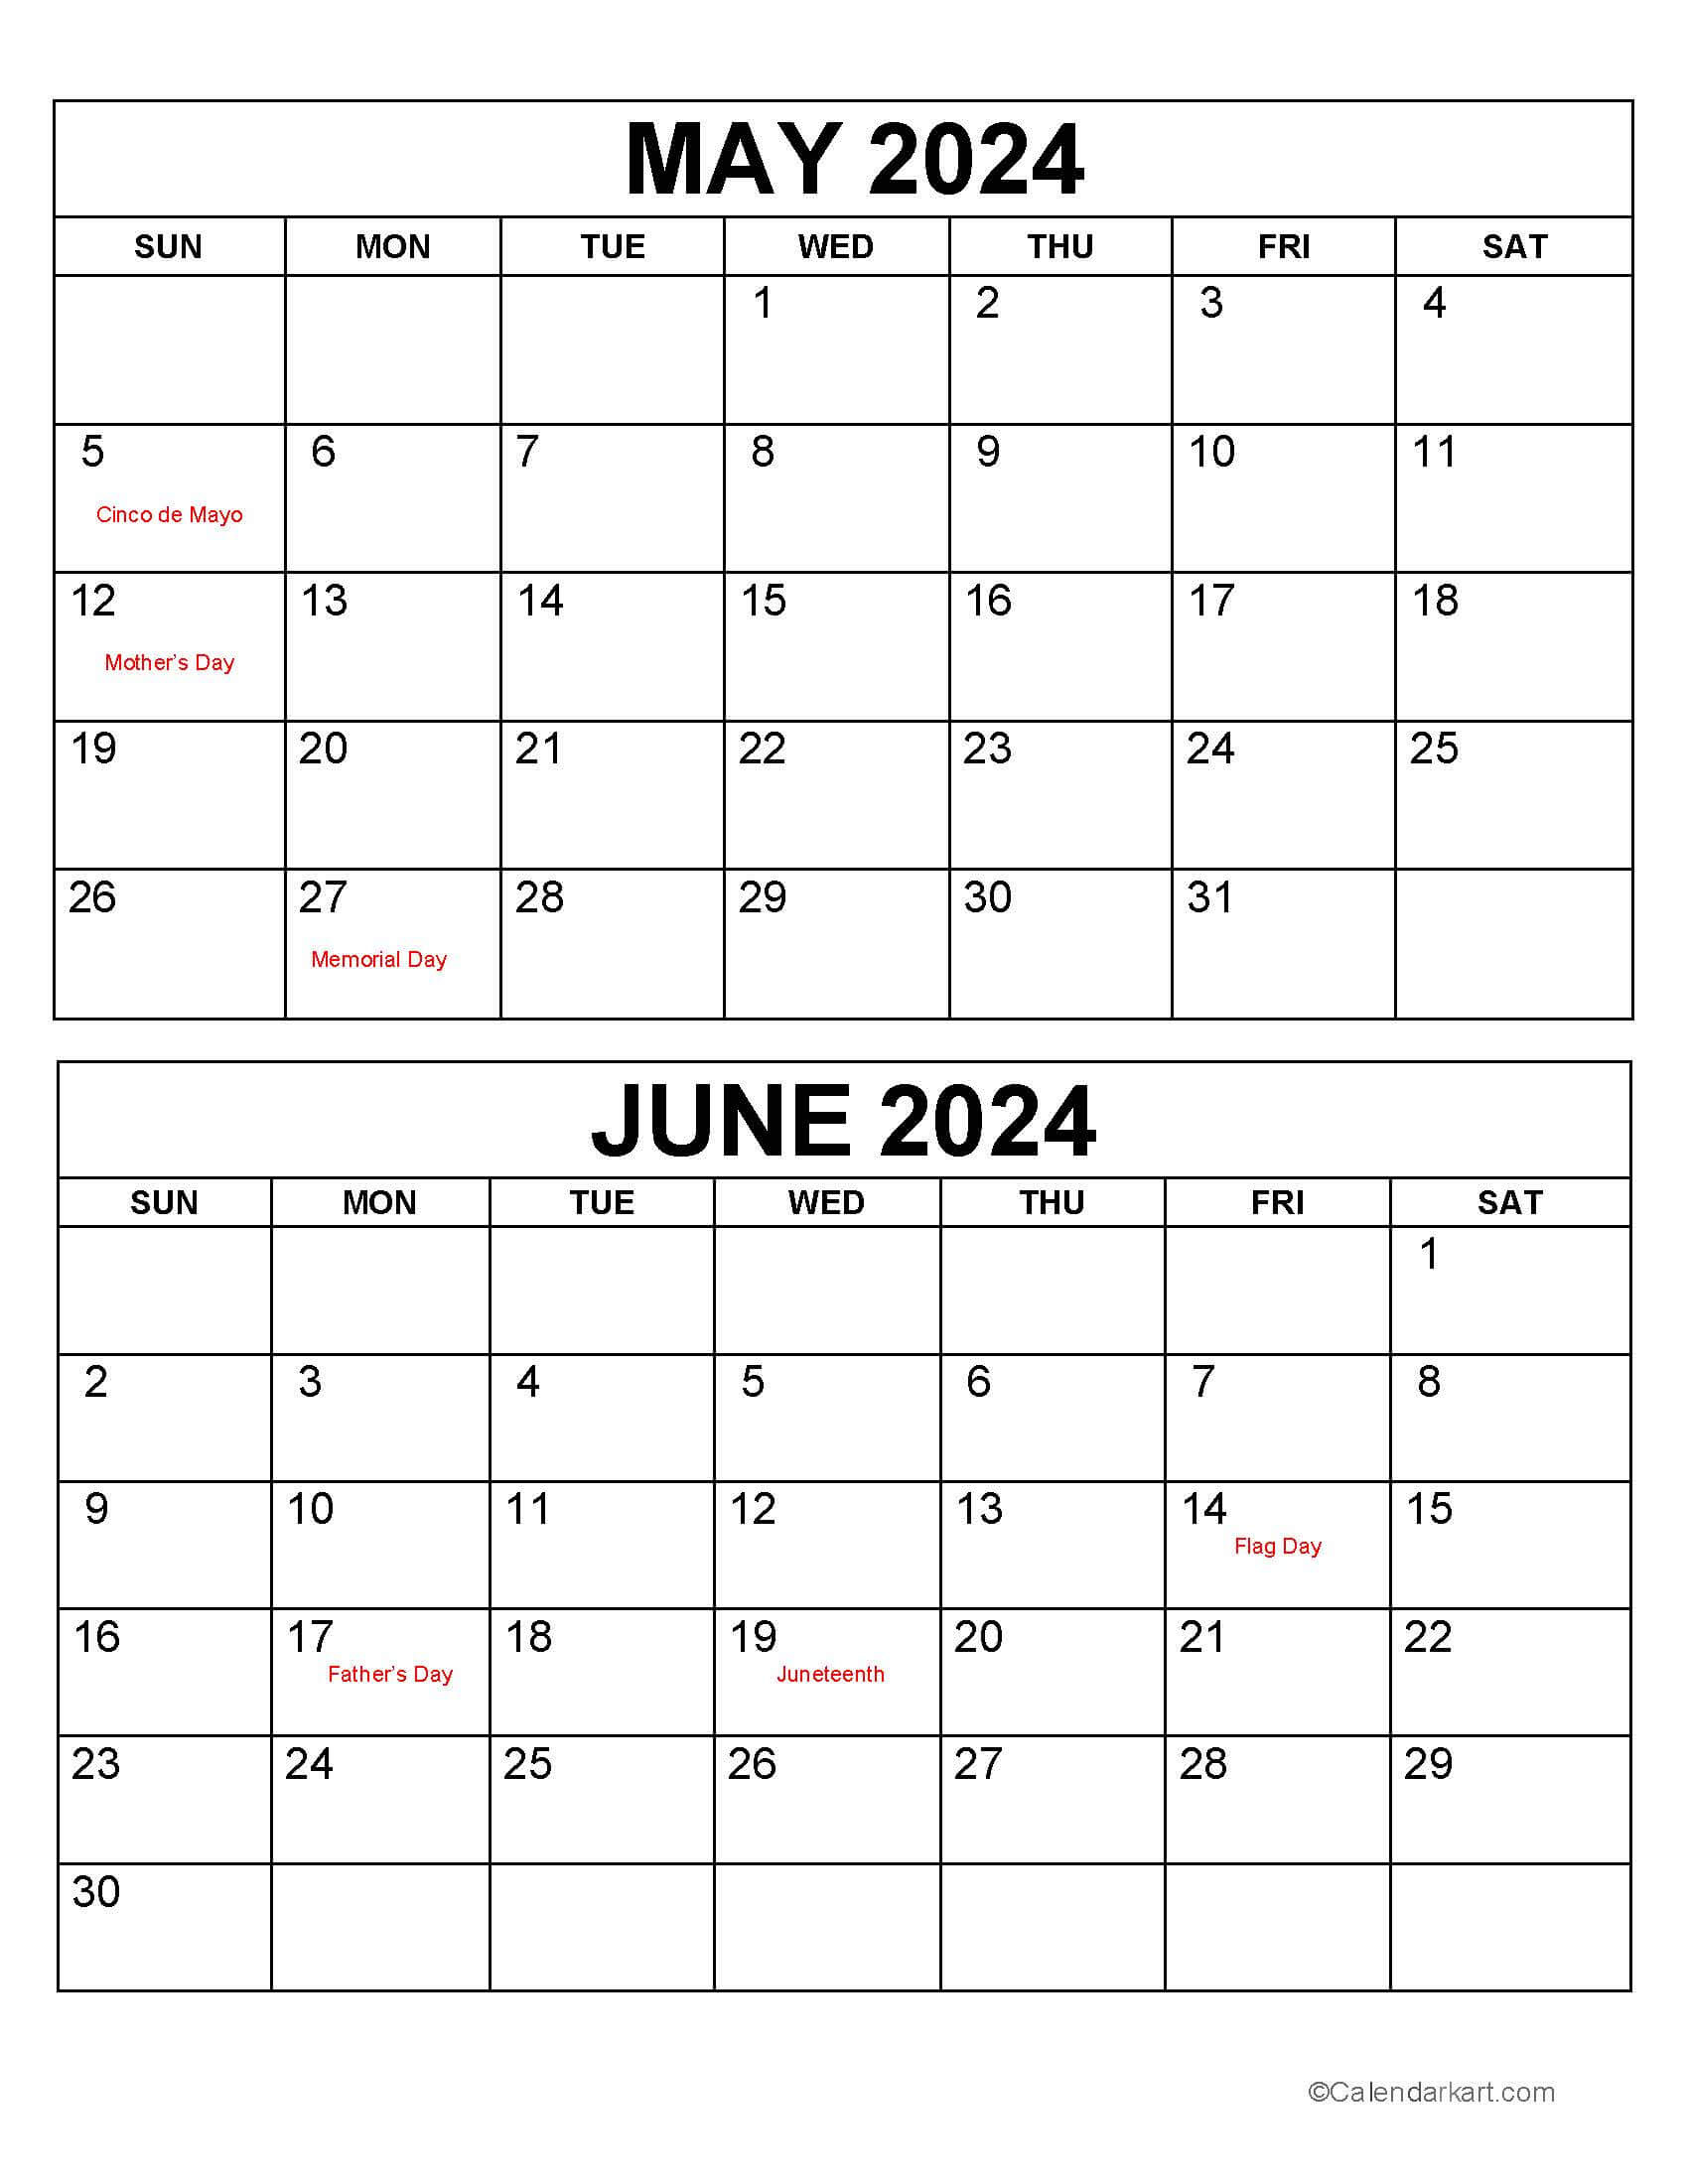 May June 2024 Calendars (3Rd Bi-Monthly) - Calendarkart pertaining to 2024 May And June Calendar